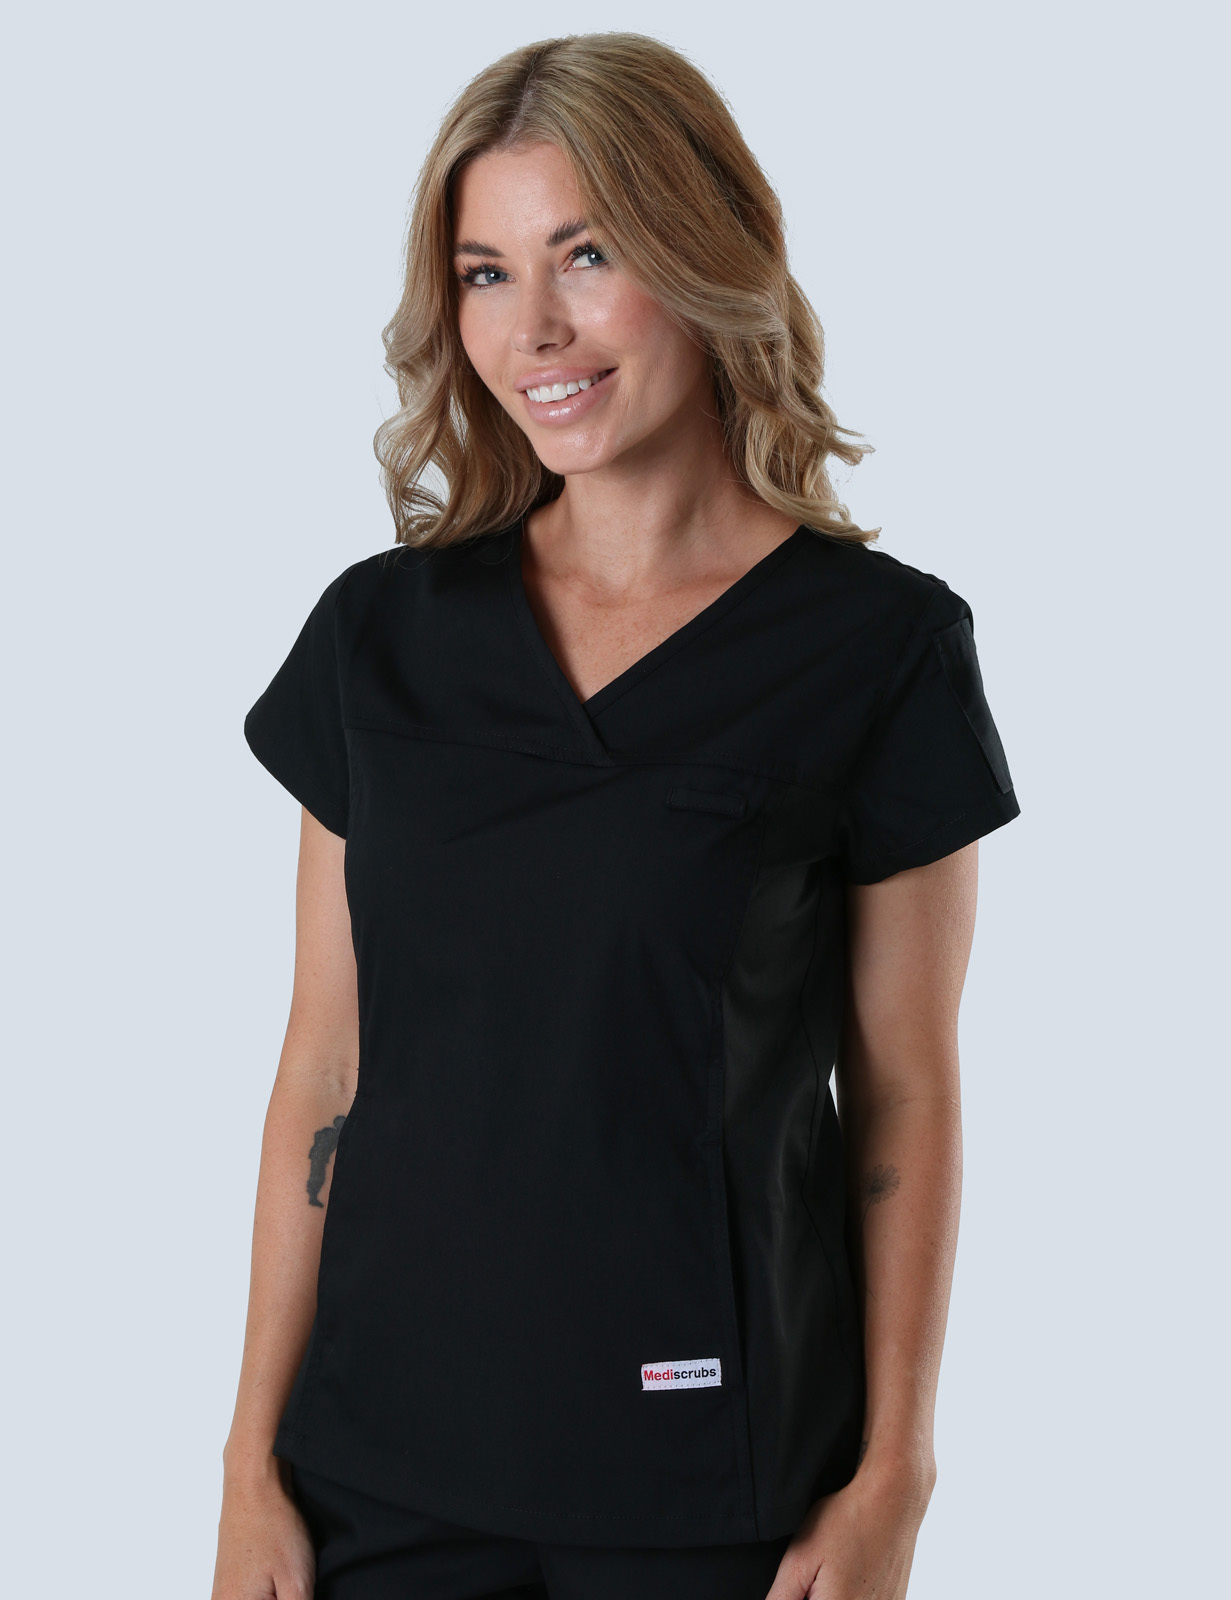 UQ Vets Gatton Radiology Uniform Top Only Bundle (Women's Fit Spandex Top in Black incl Logos)